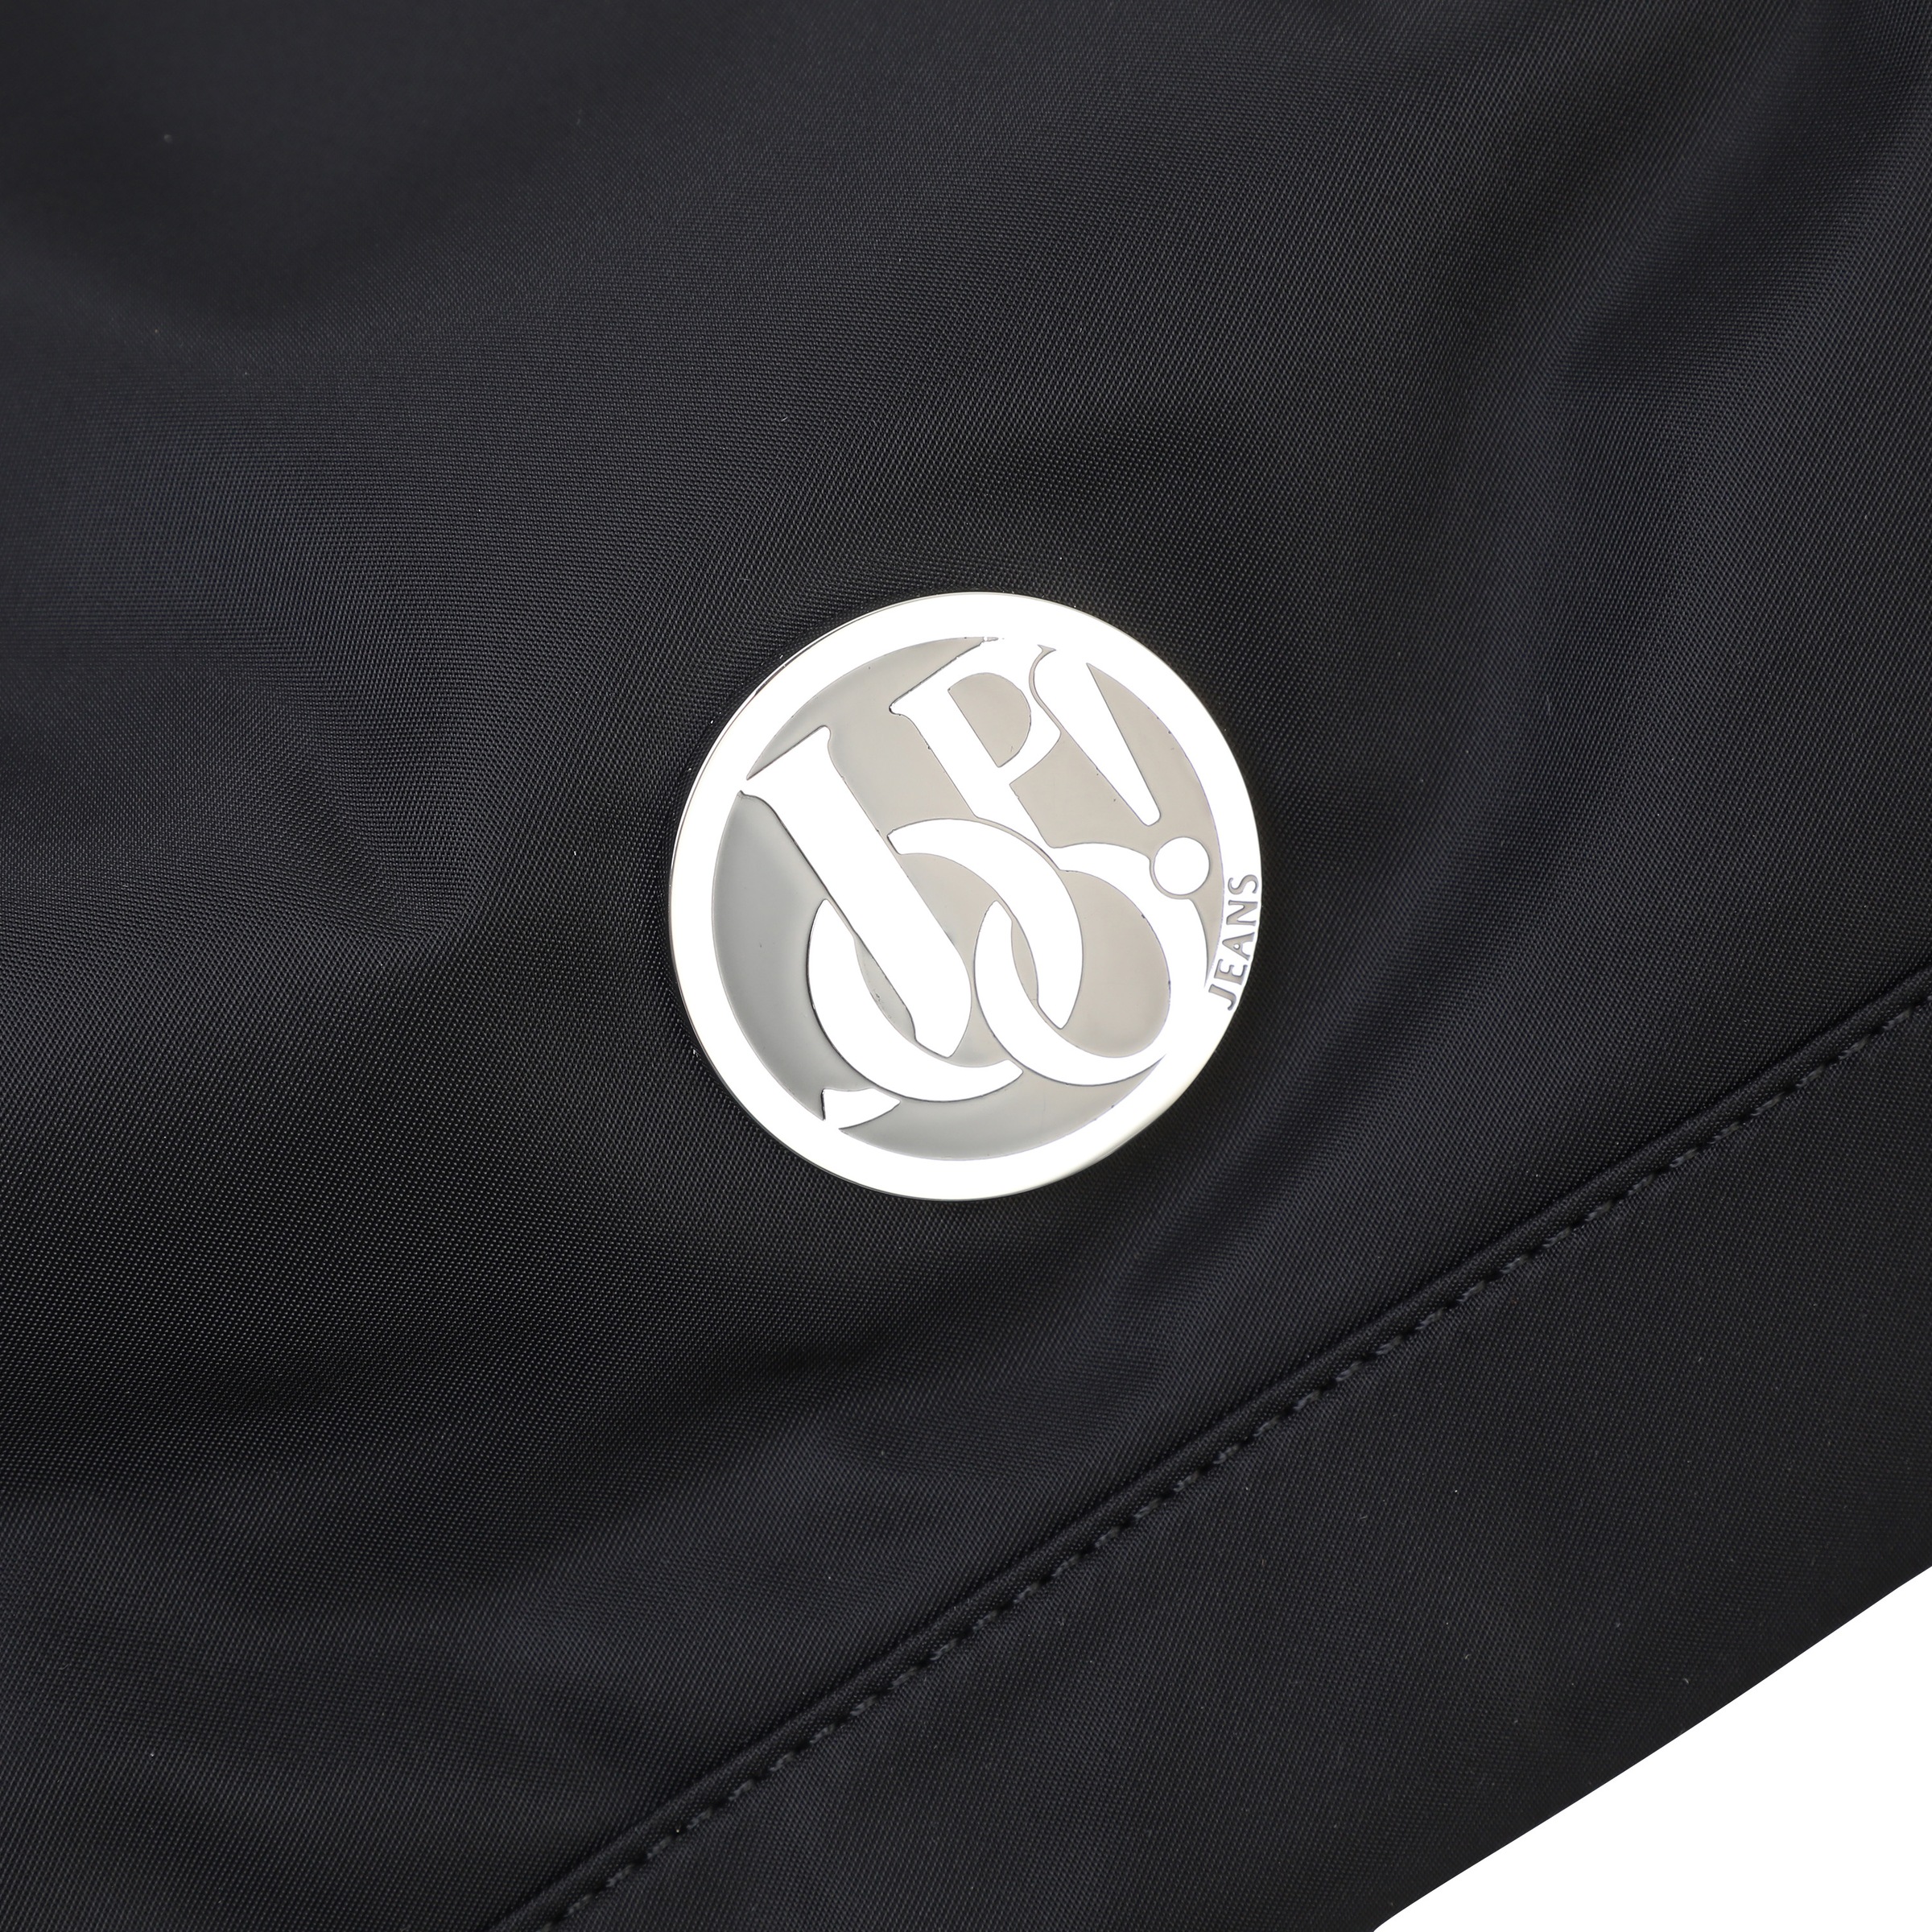 Jeans Schriftzug backpack Joop Logo bei den ♕ lvz«, »lietissimo auf mit Trageriemen Cityrucksack elva